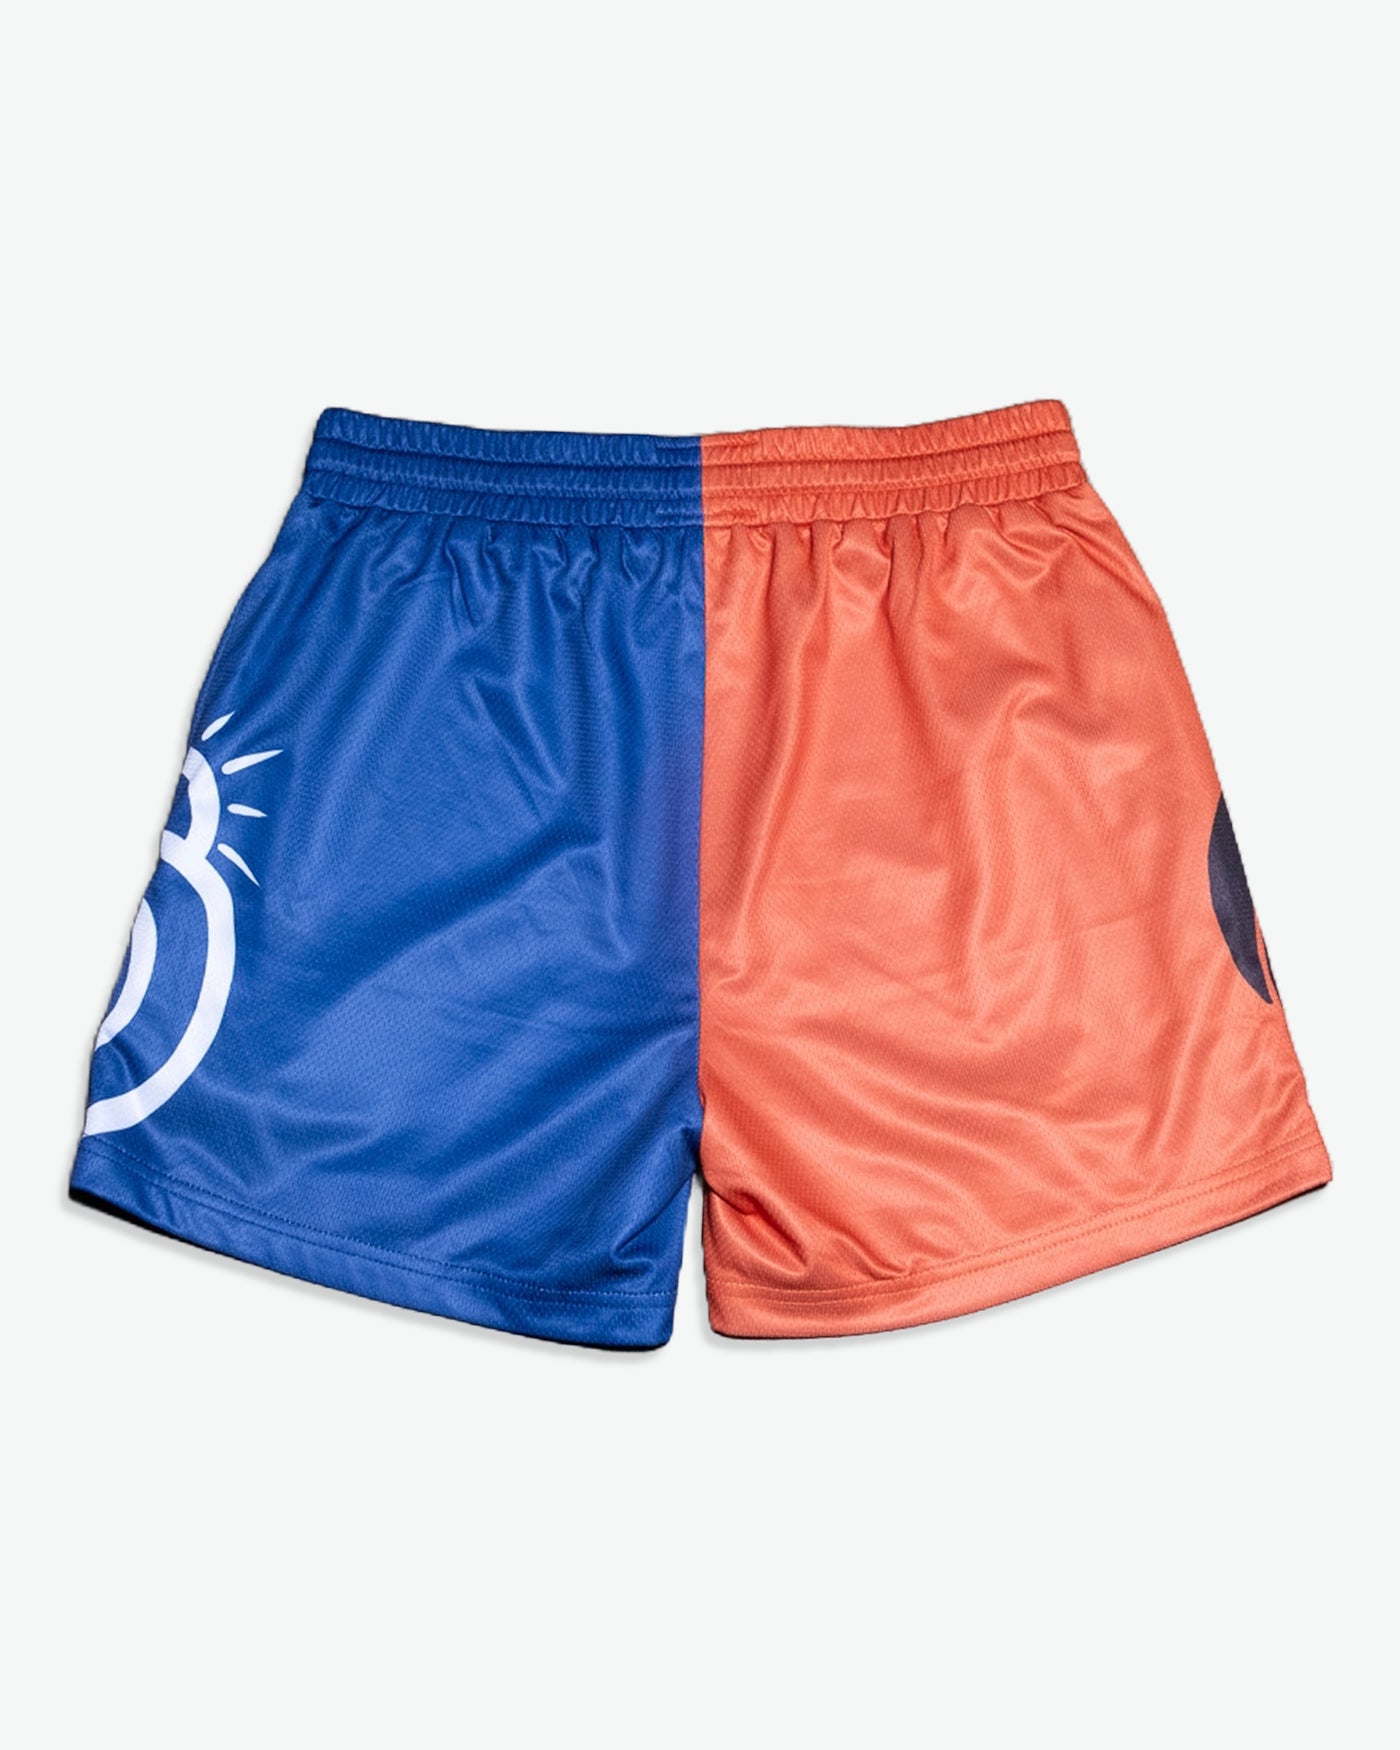 Sun Moon Two Tone Shorts / Orange / Blue